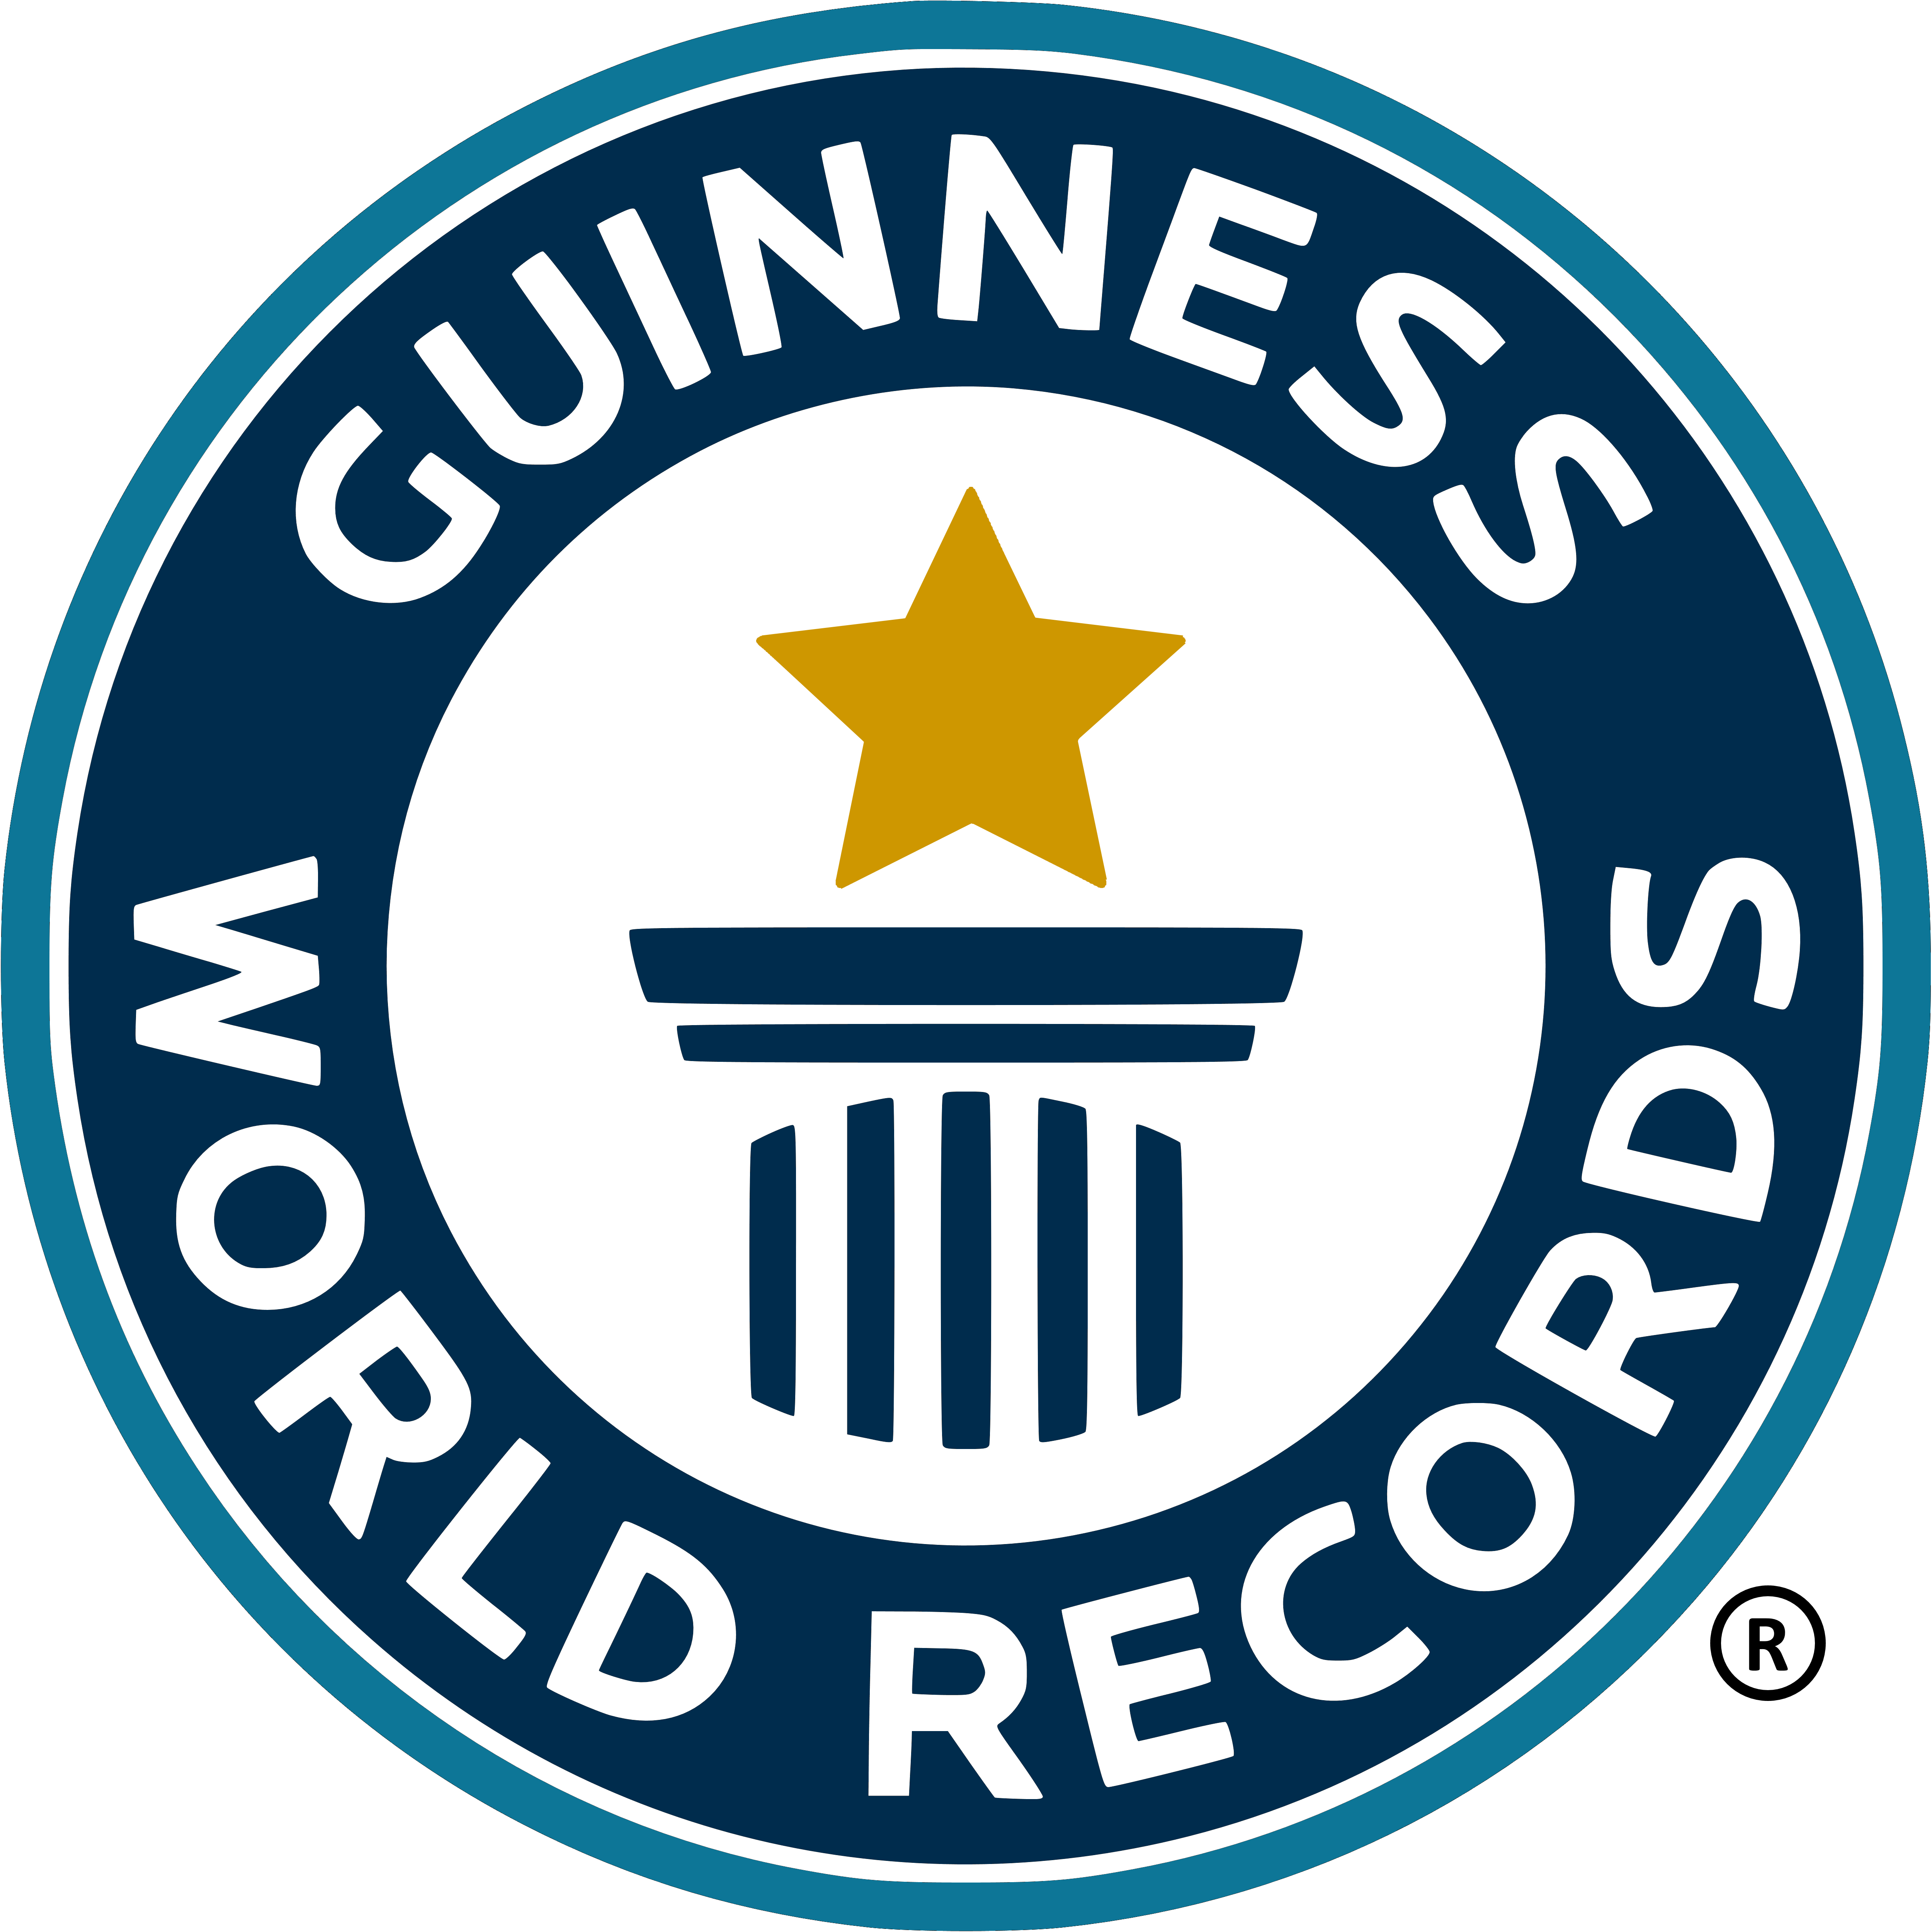 A Ilha Record Logo Pin by Jgigliotti on Record Label Logos Record